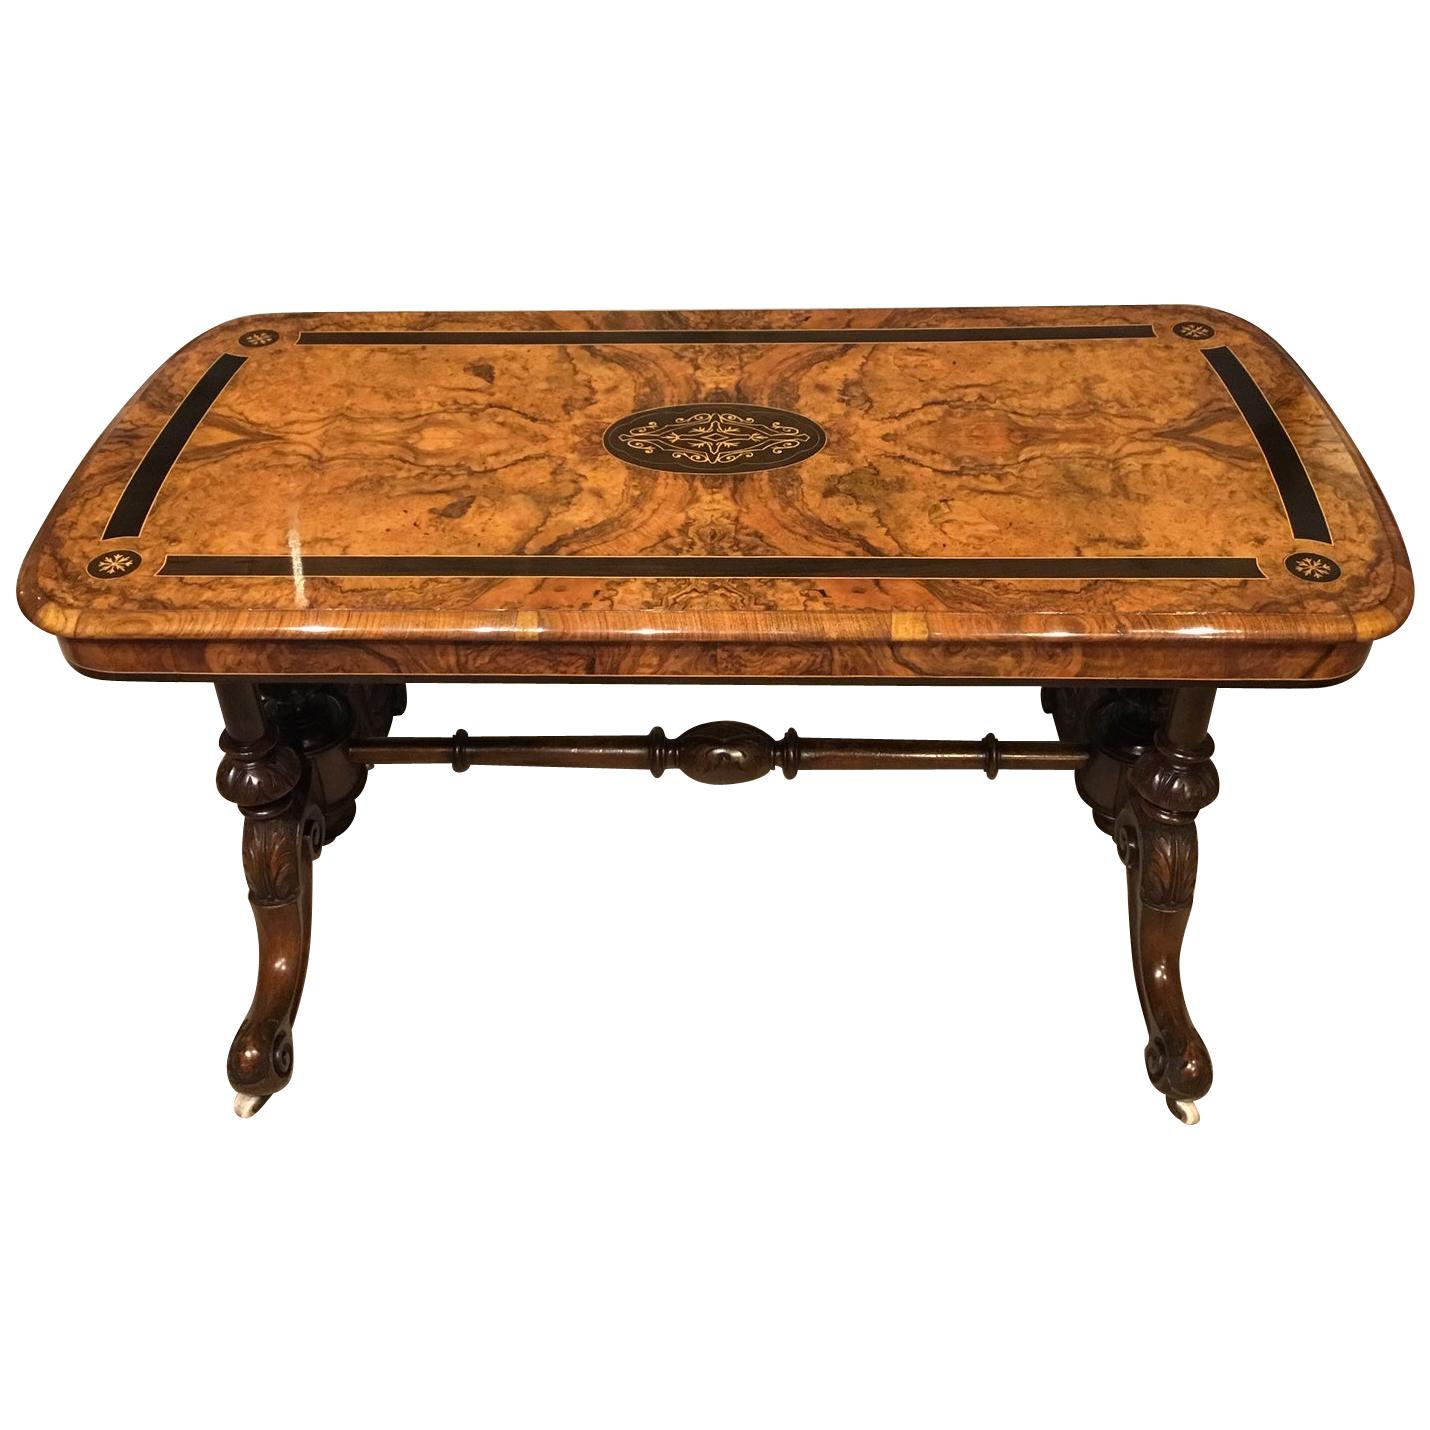 Victorian Period Burr Walnut and Ebony Inlaid Antique Coffee Table